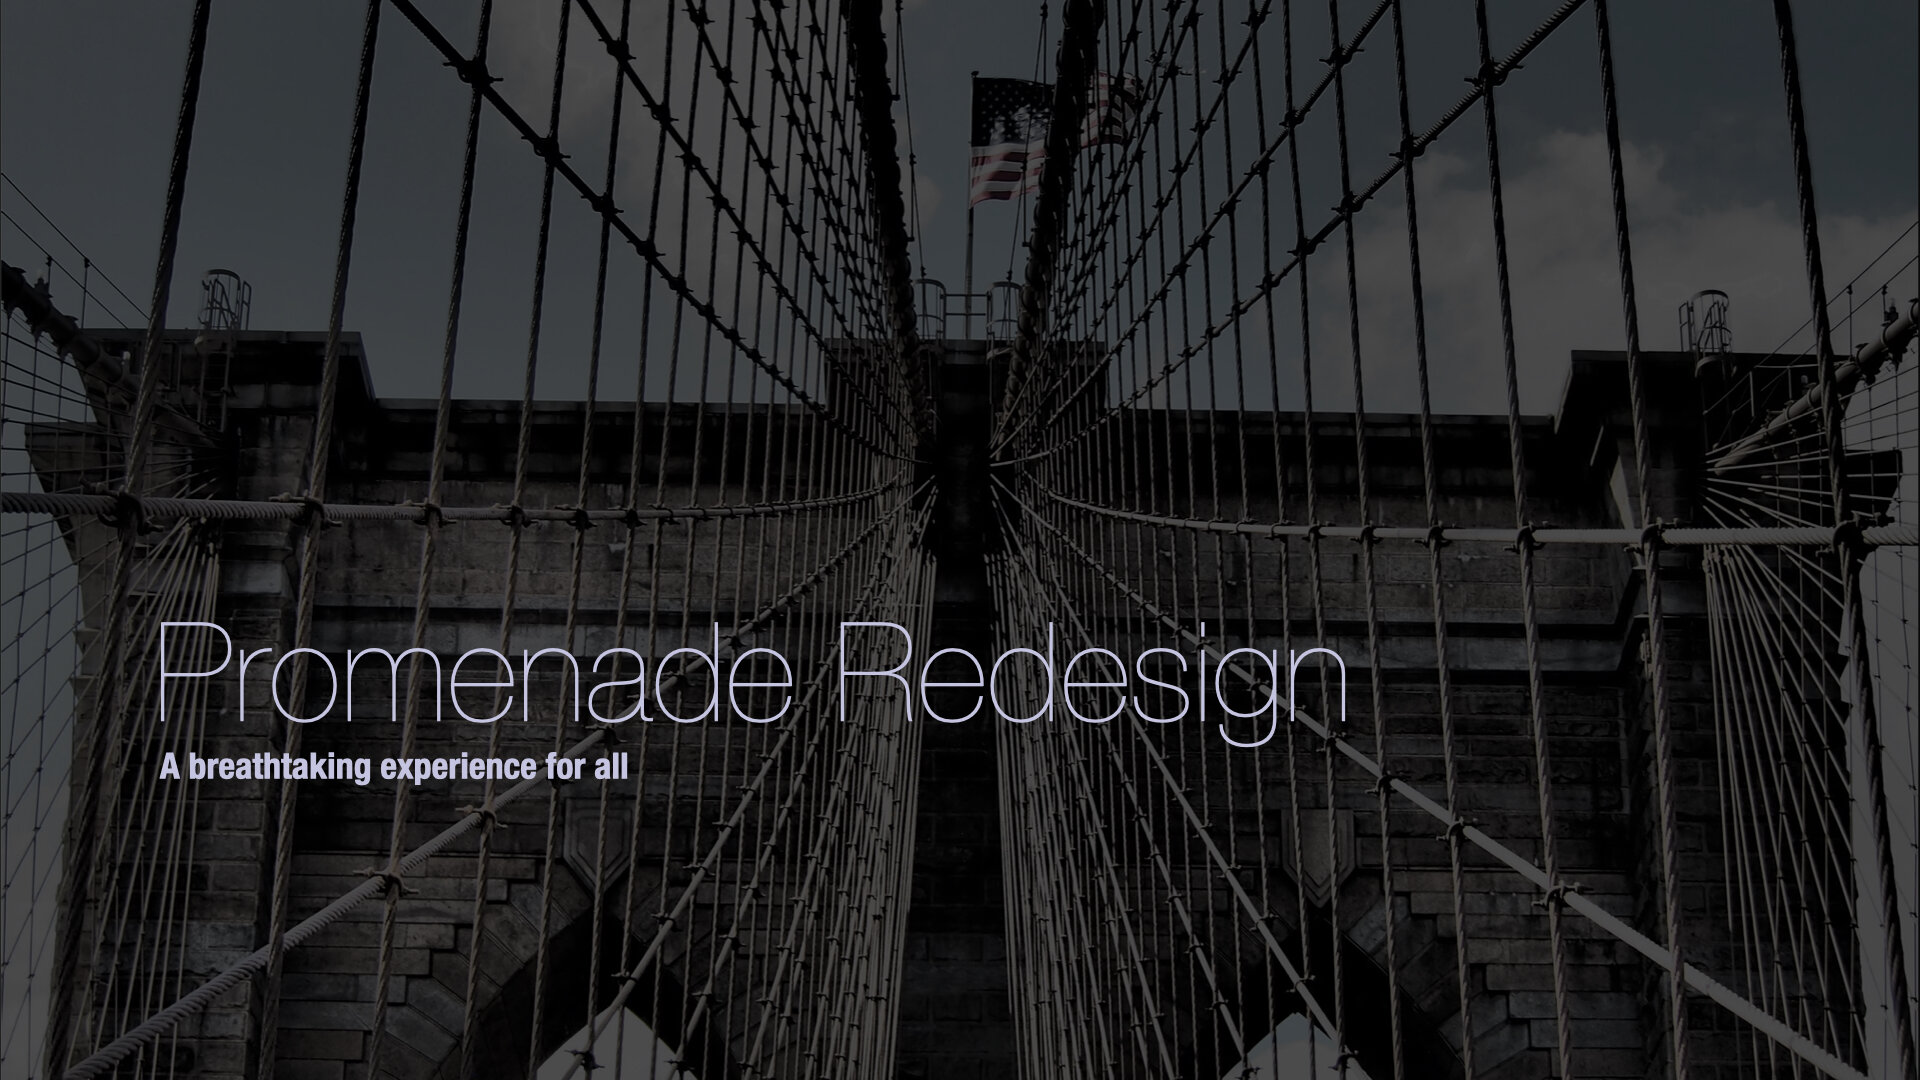 Slideshow showing Regena's experience framework